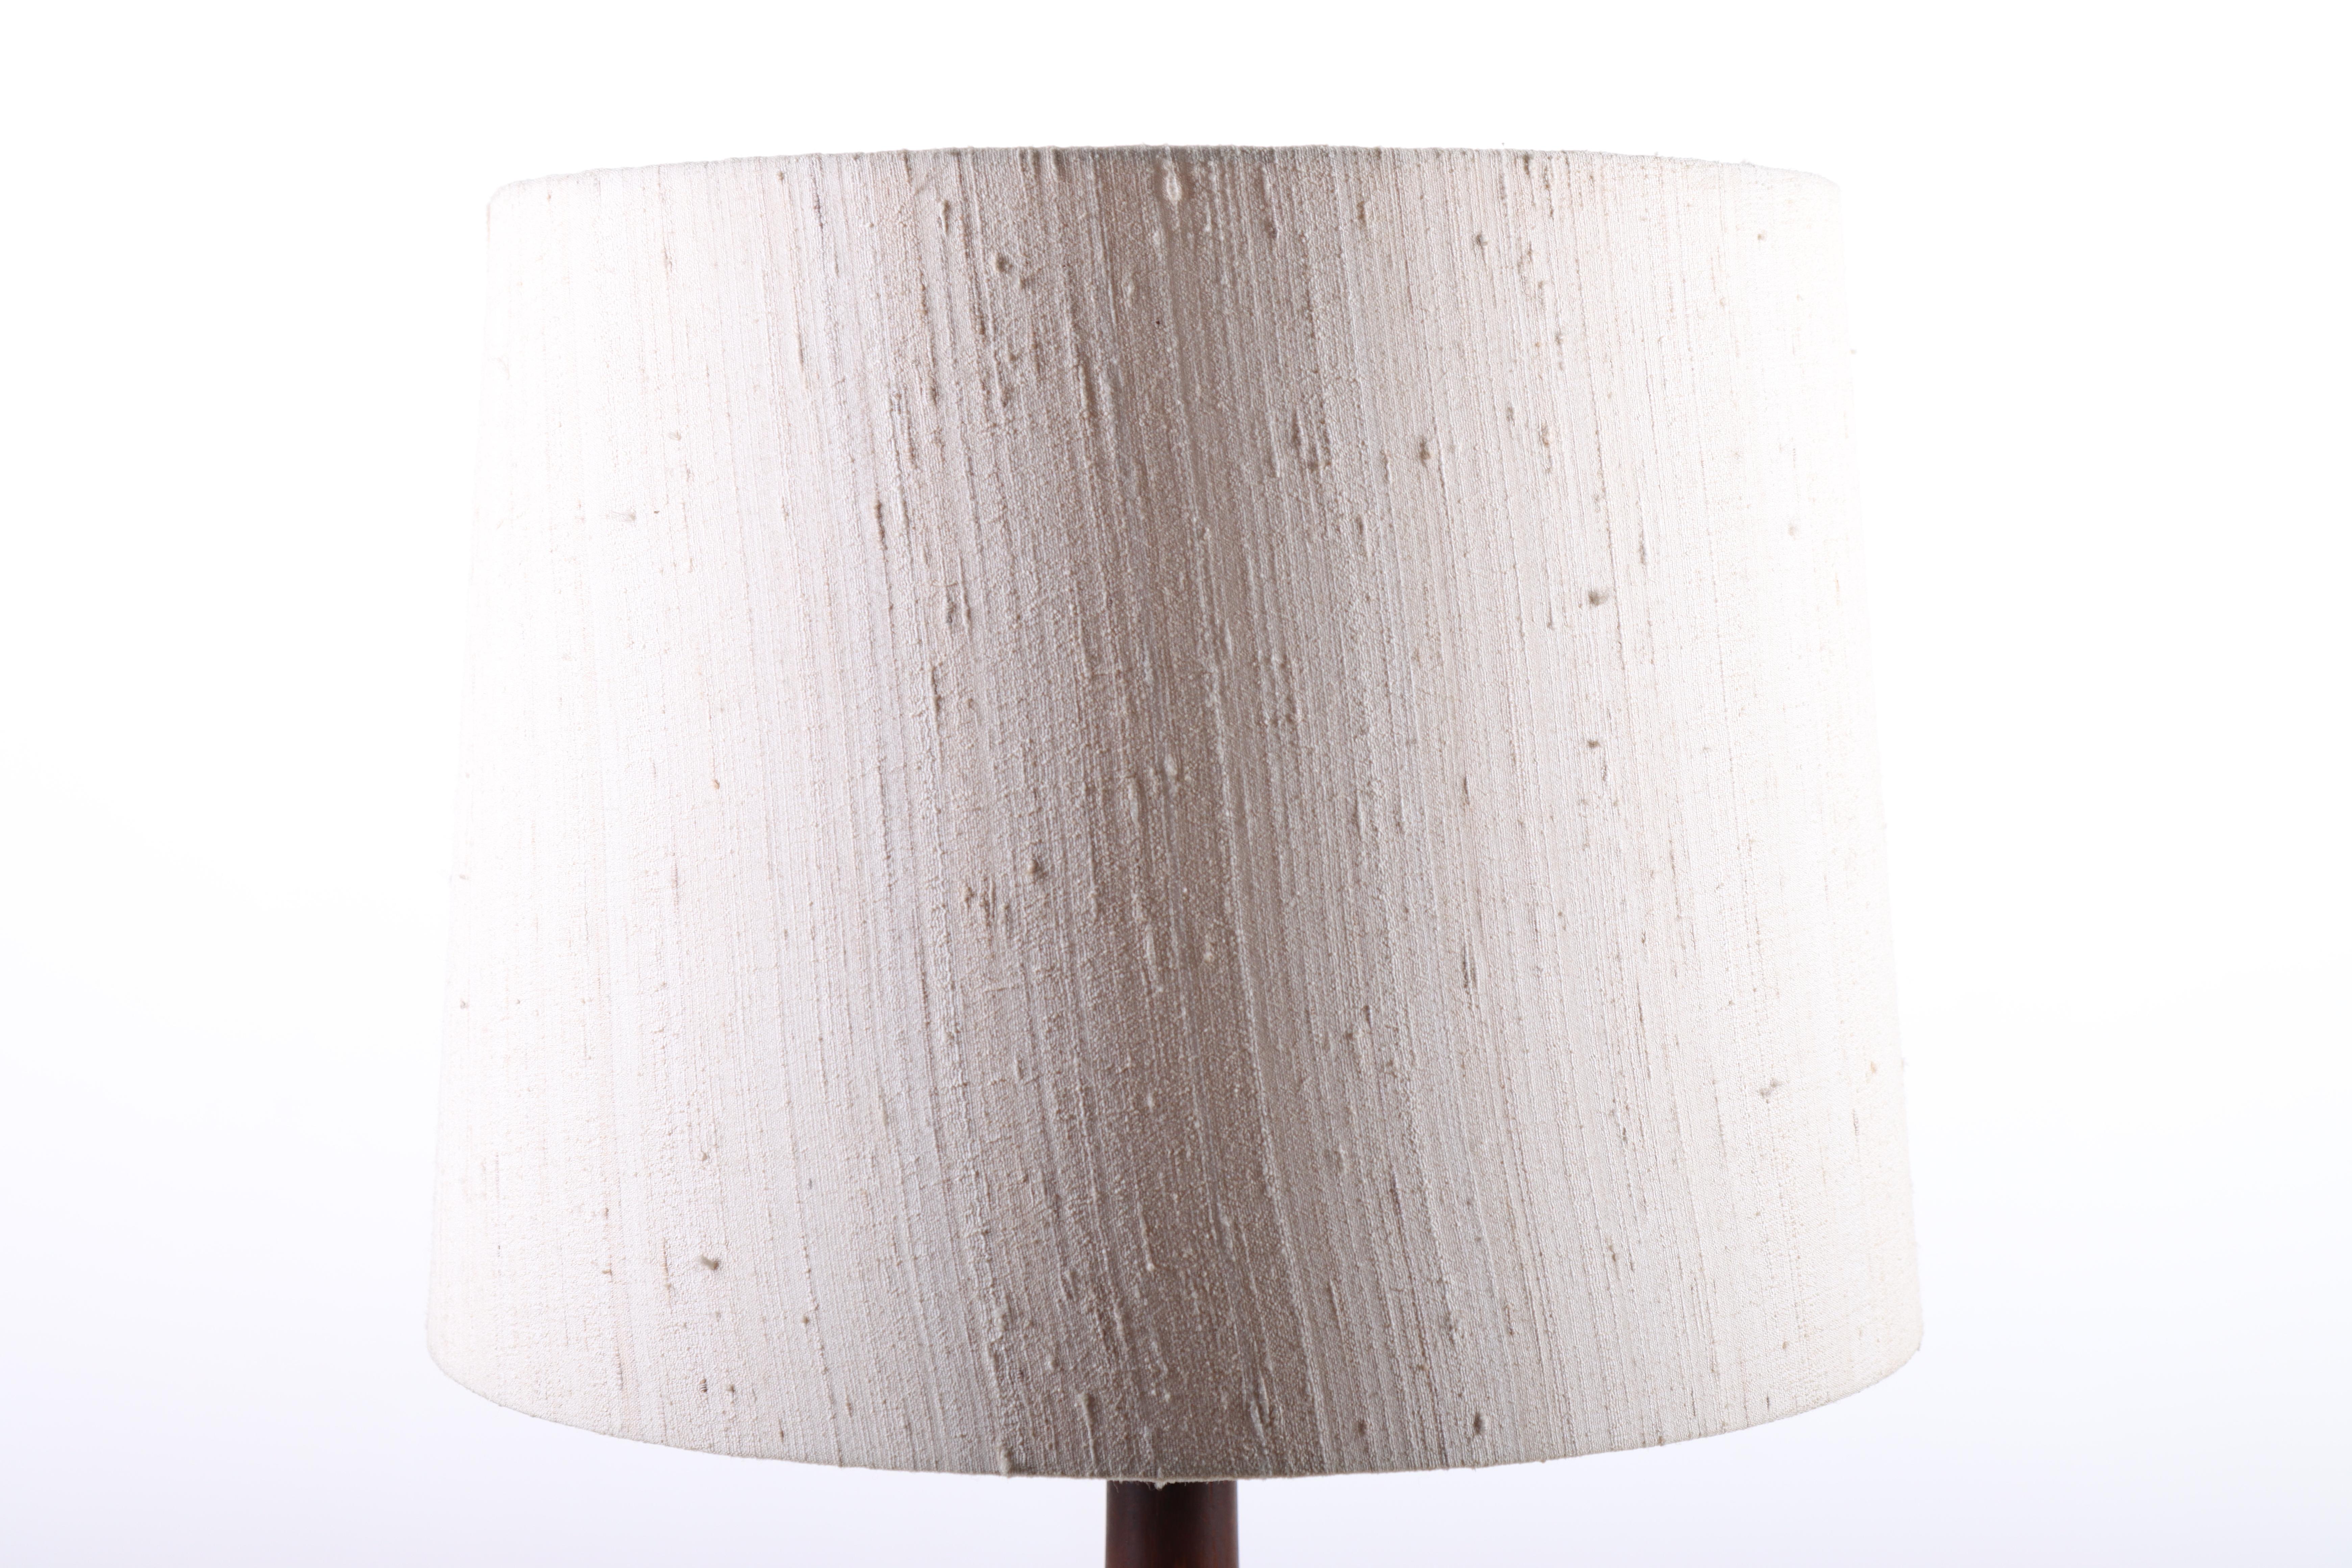 Scandinavian Modern Mid-Century Scandinavian Table Lamp in Solid Teak, Made in Denmark 1960s For Sale